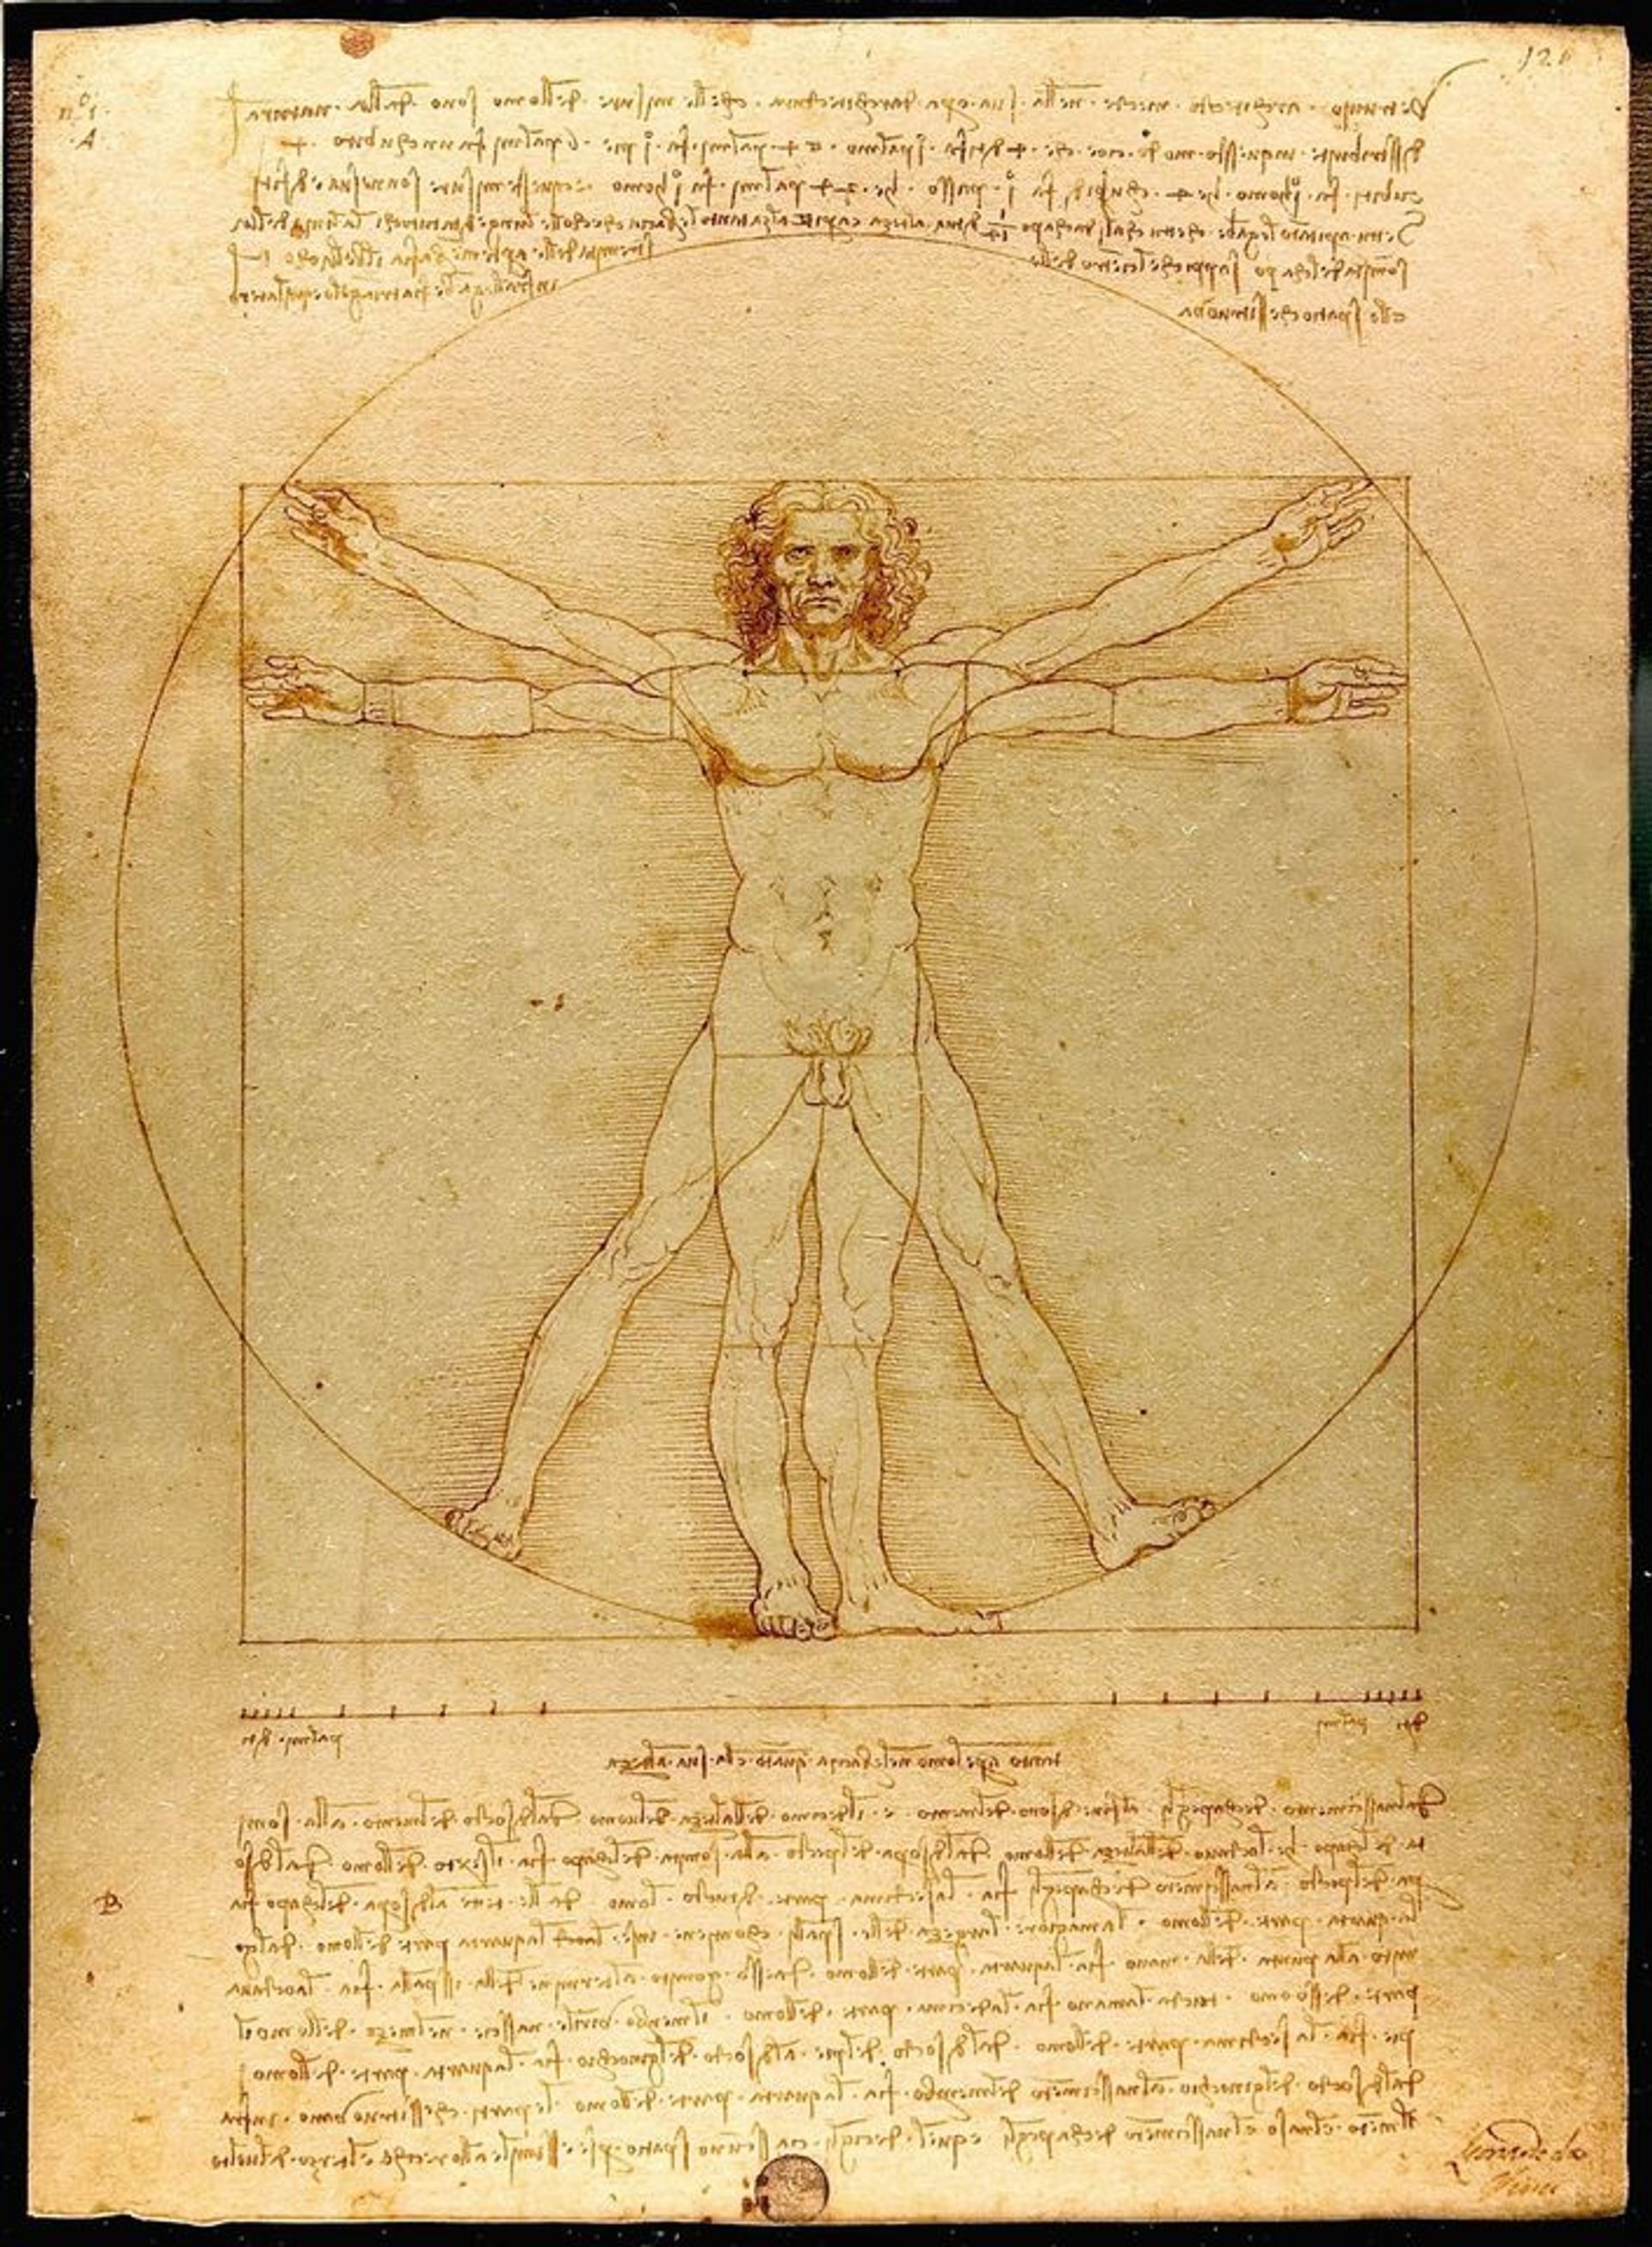 Venice will lend Leonardo's iconic Vitruvian Man (1490) 